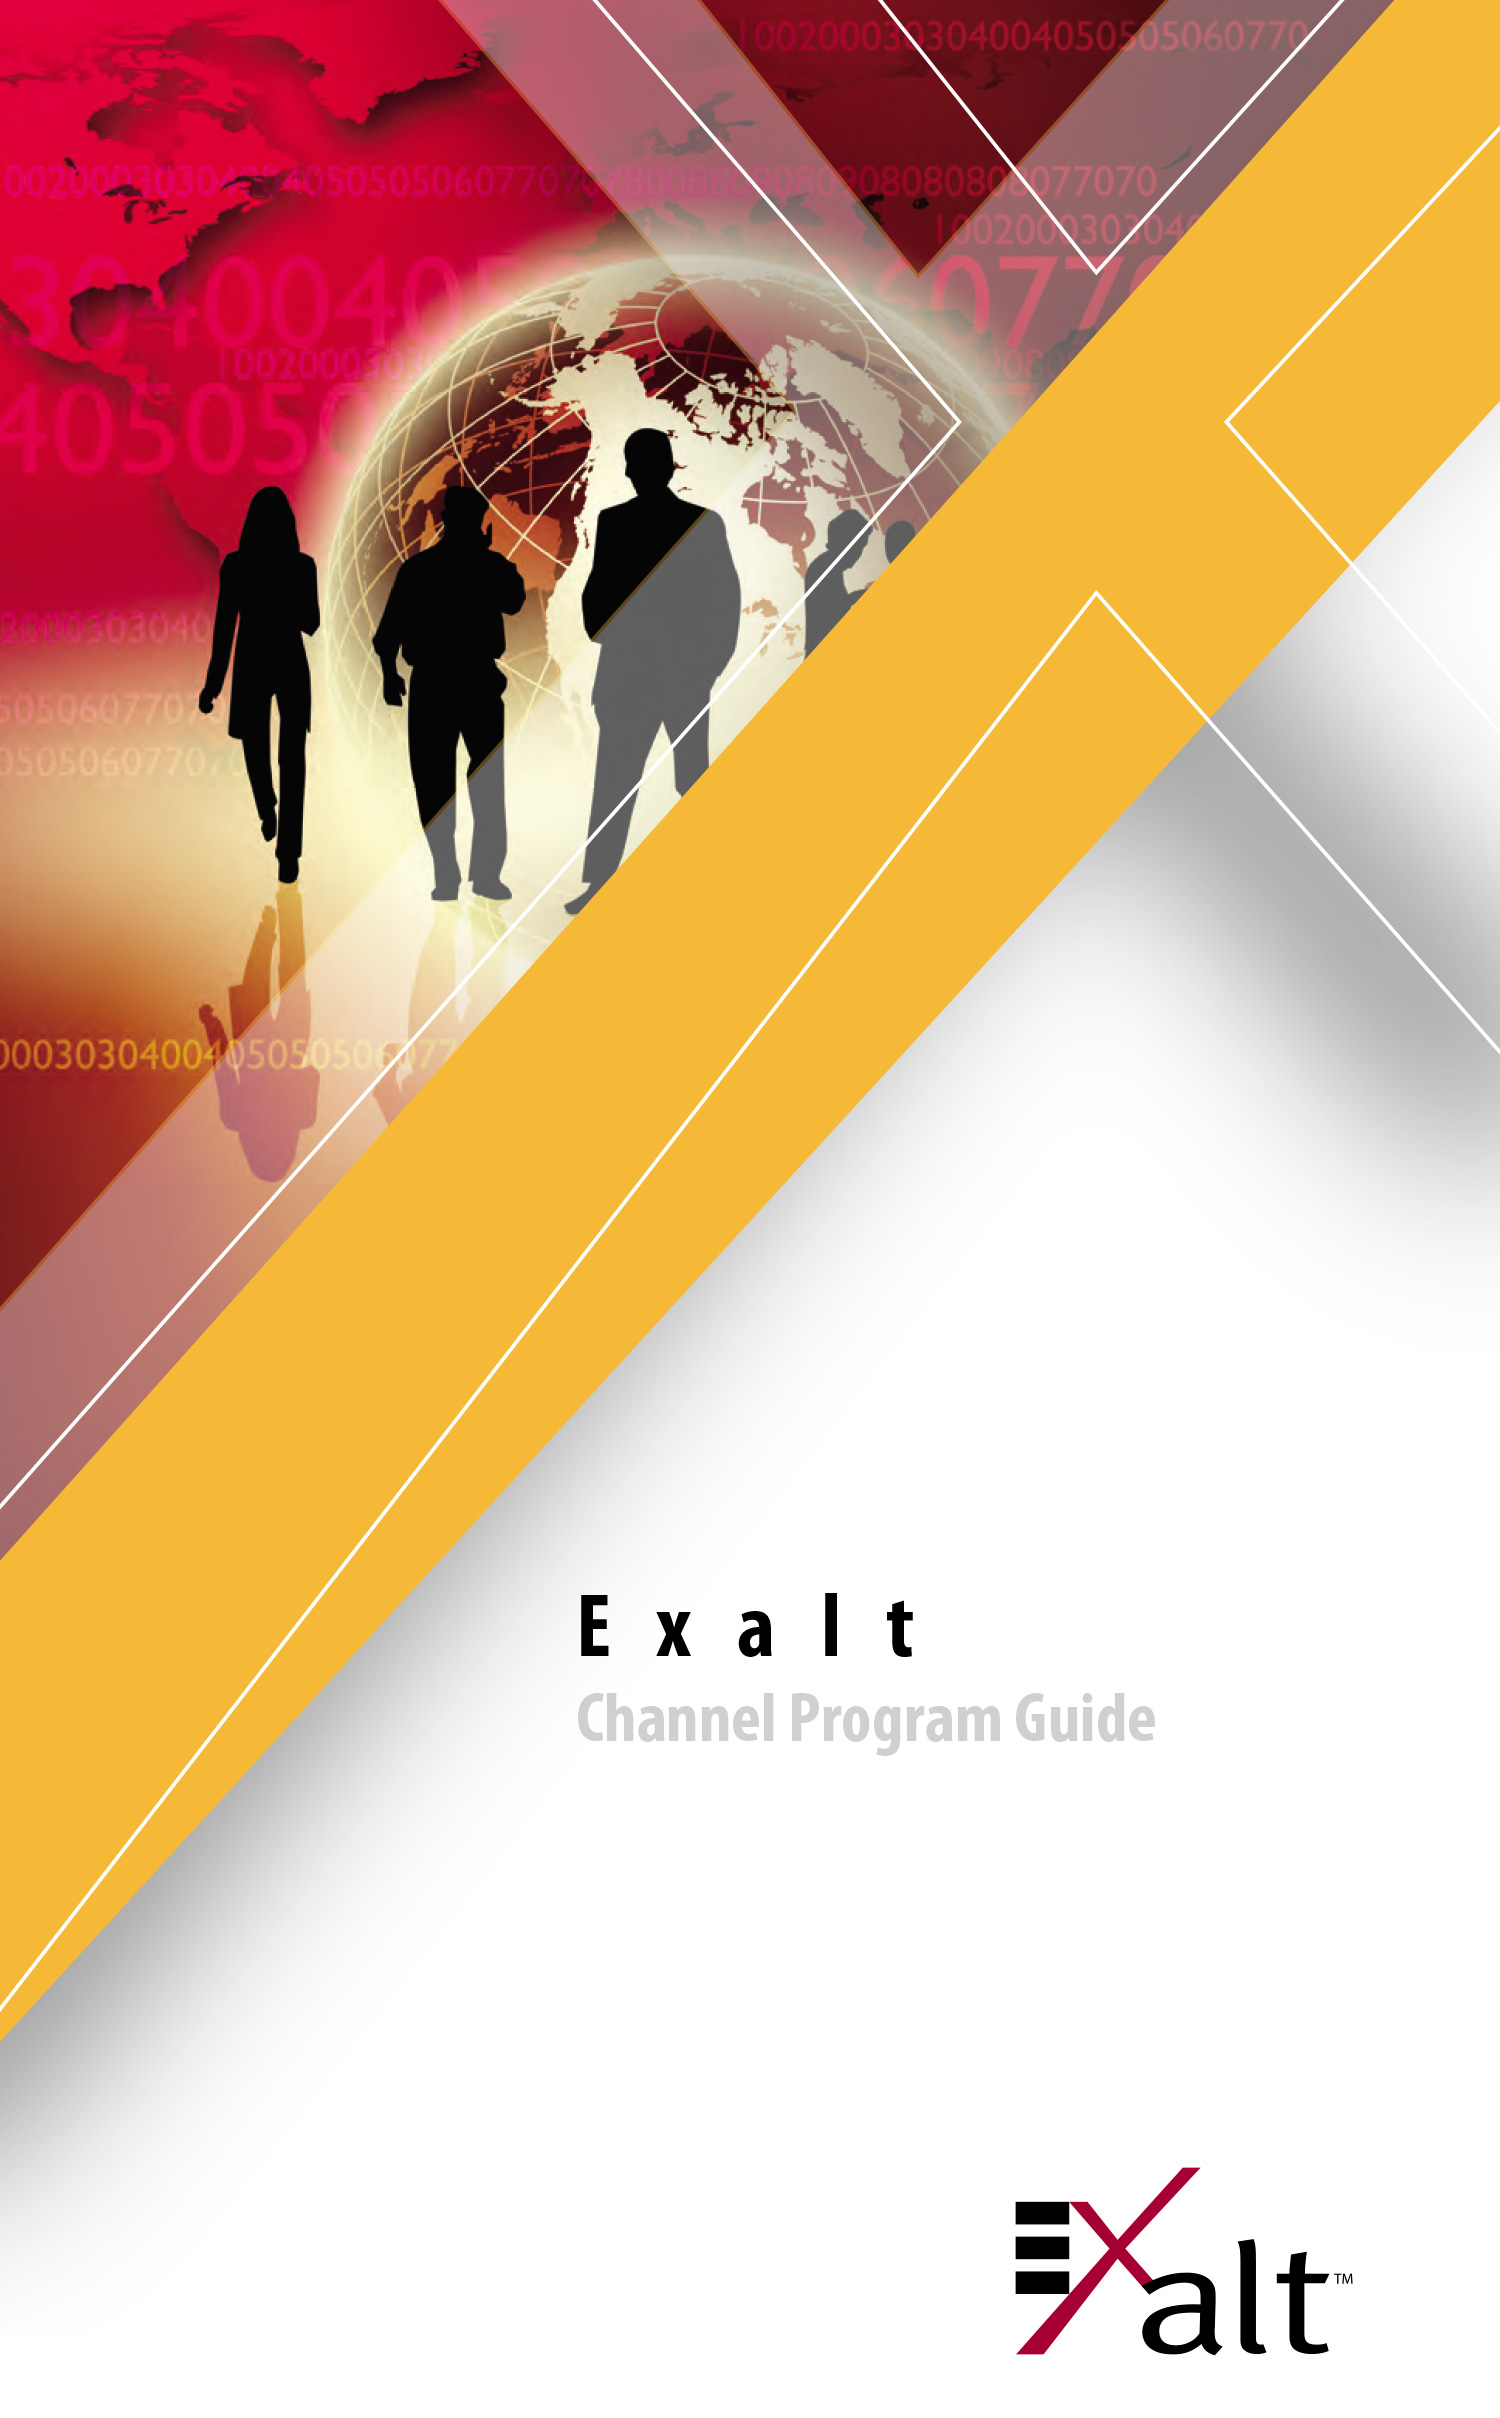 ExaltProgramGuide1.jpg